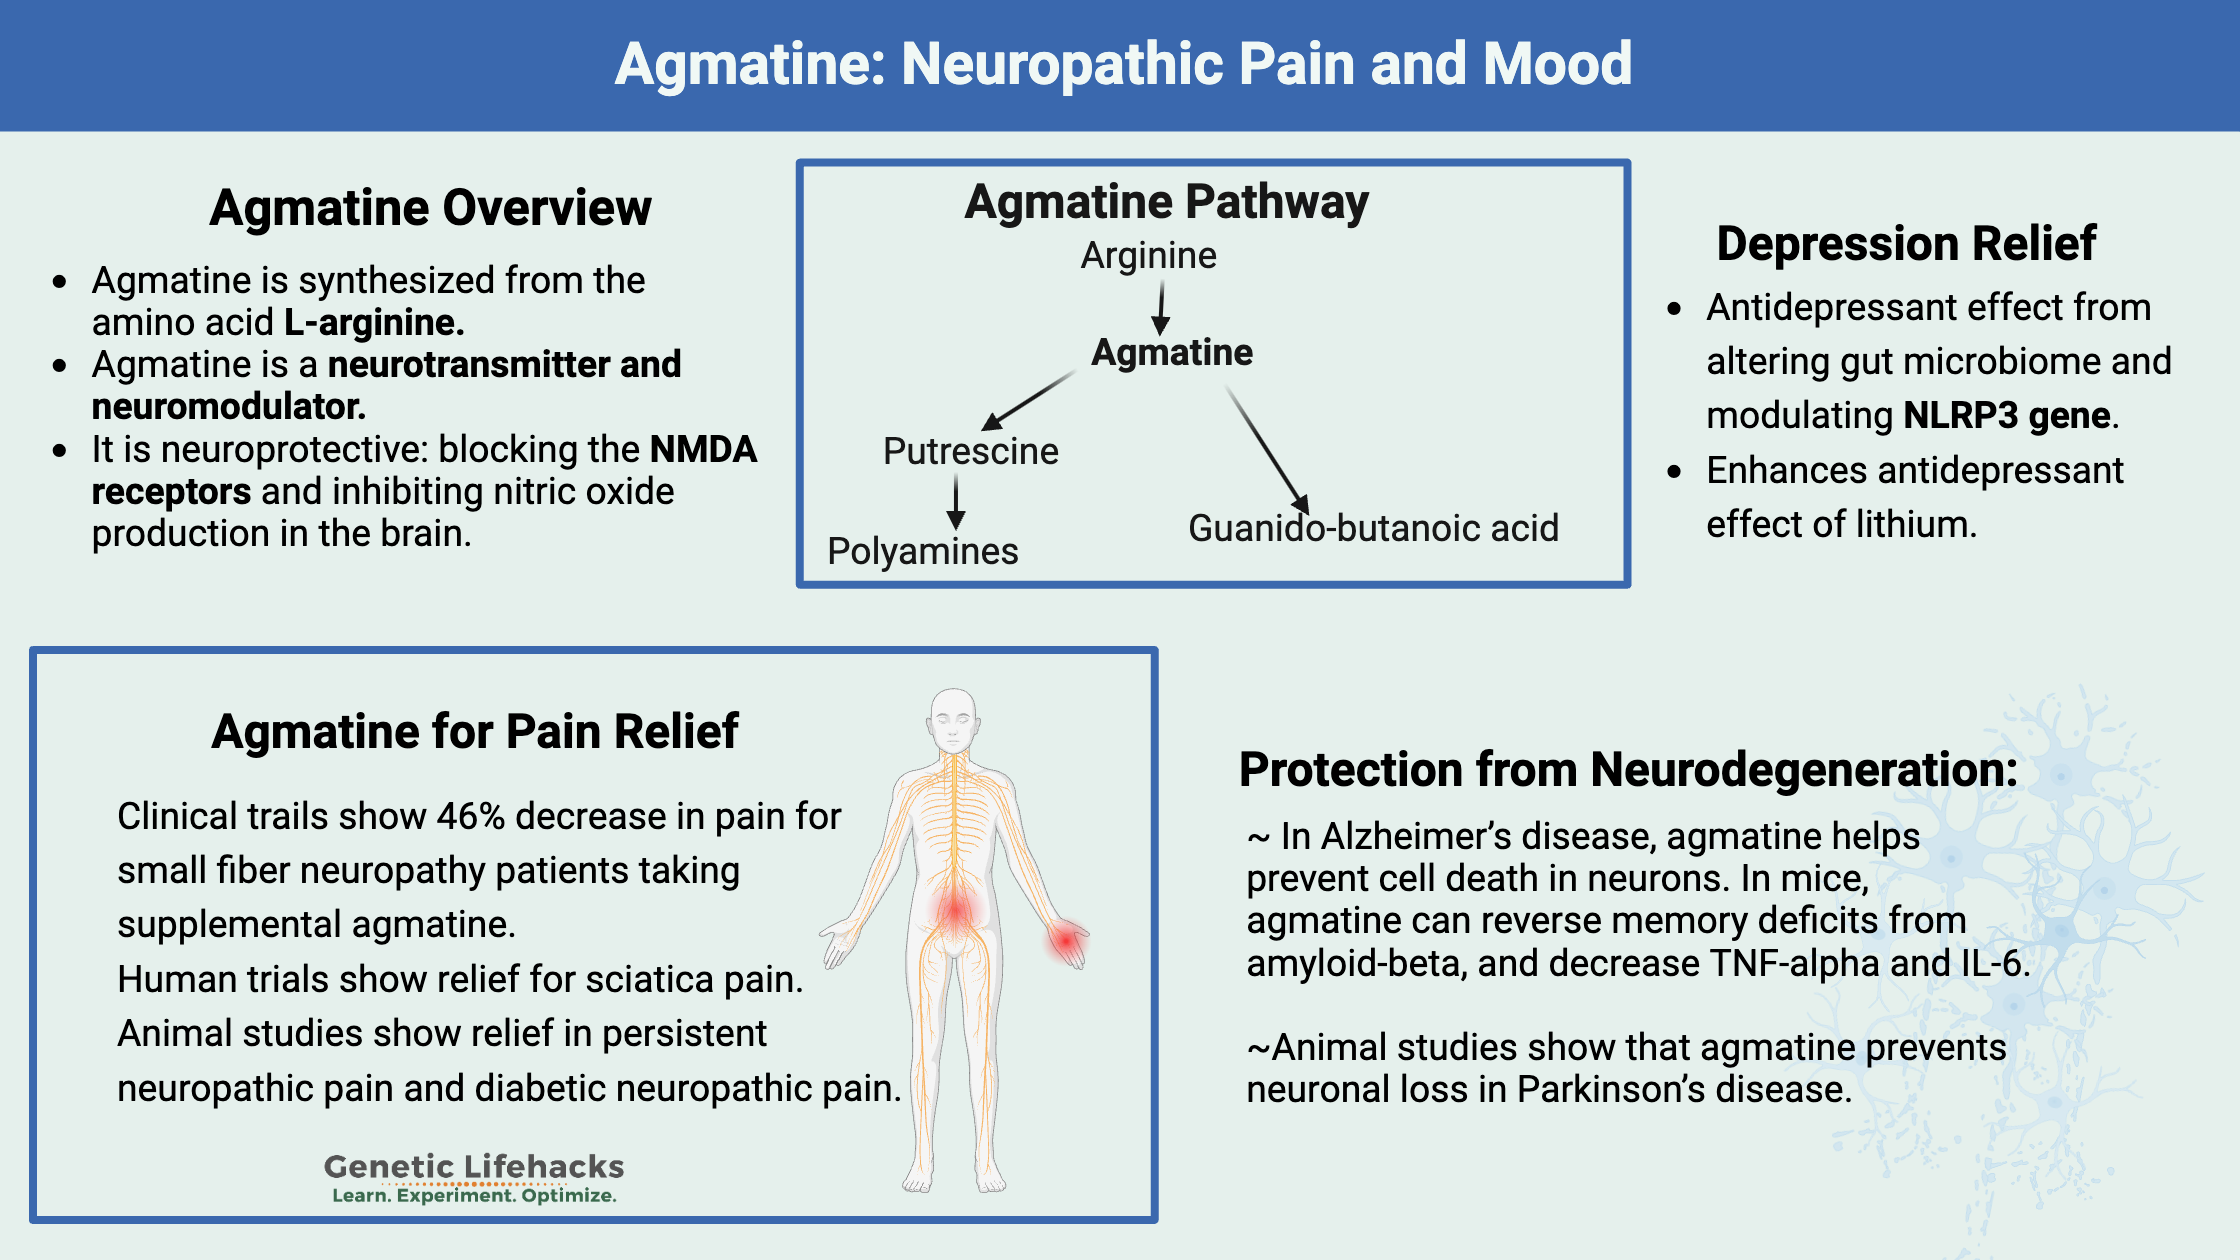 Agmatine neuropathic benefits, antidepressant, pain relief